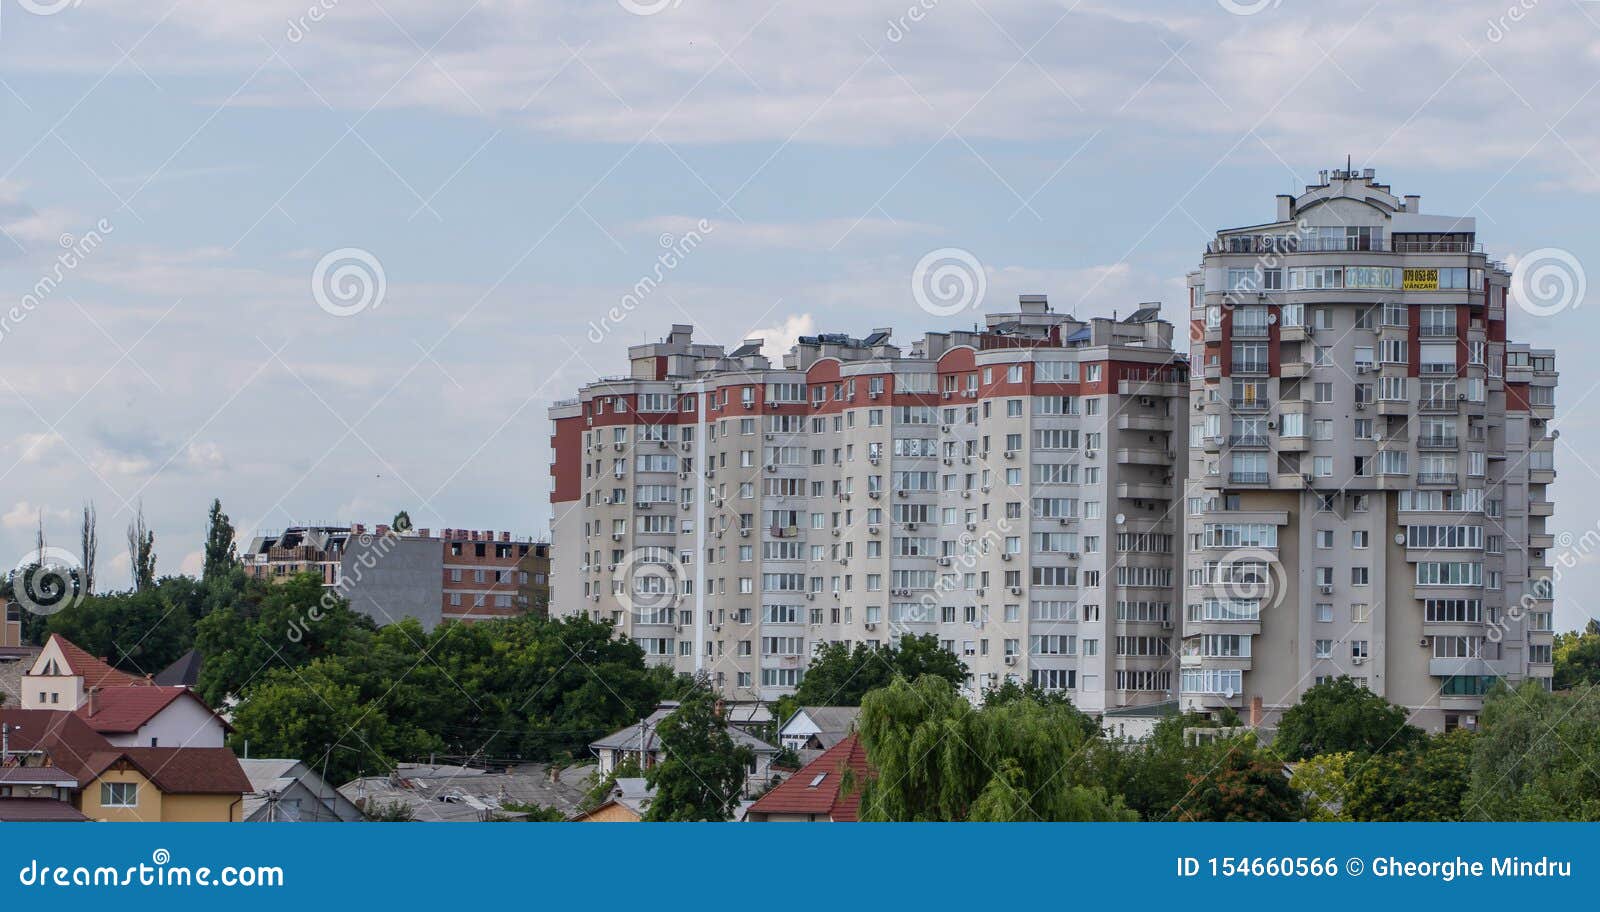 chisinau, moldova - july 14, 2019. apartment building in the city